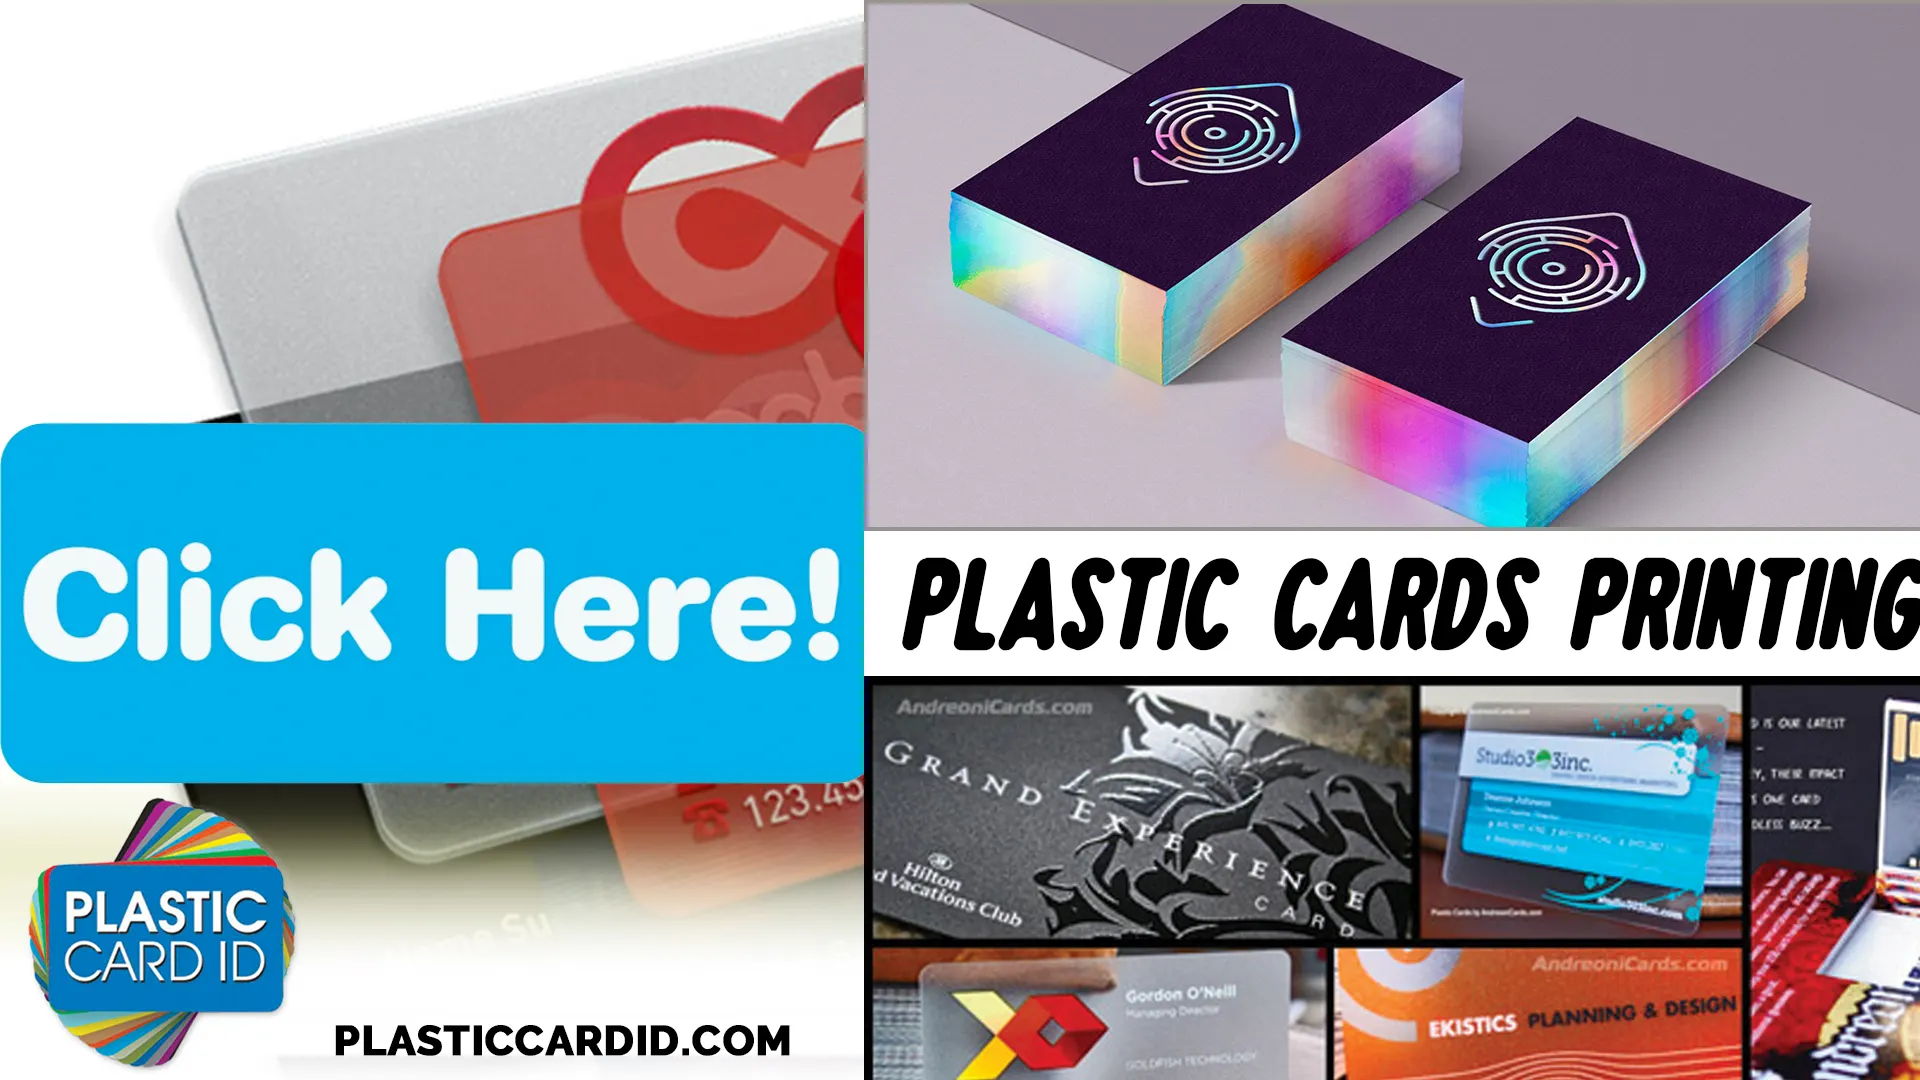 Why Choose Eco-Friendly Card Printing?